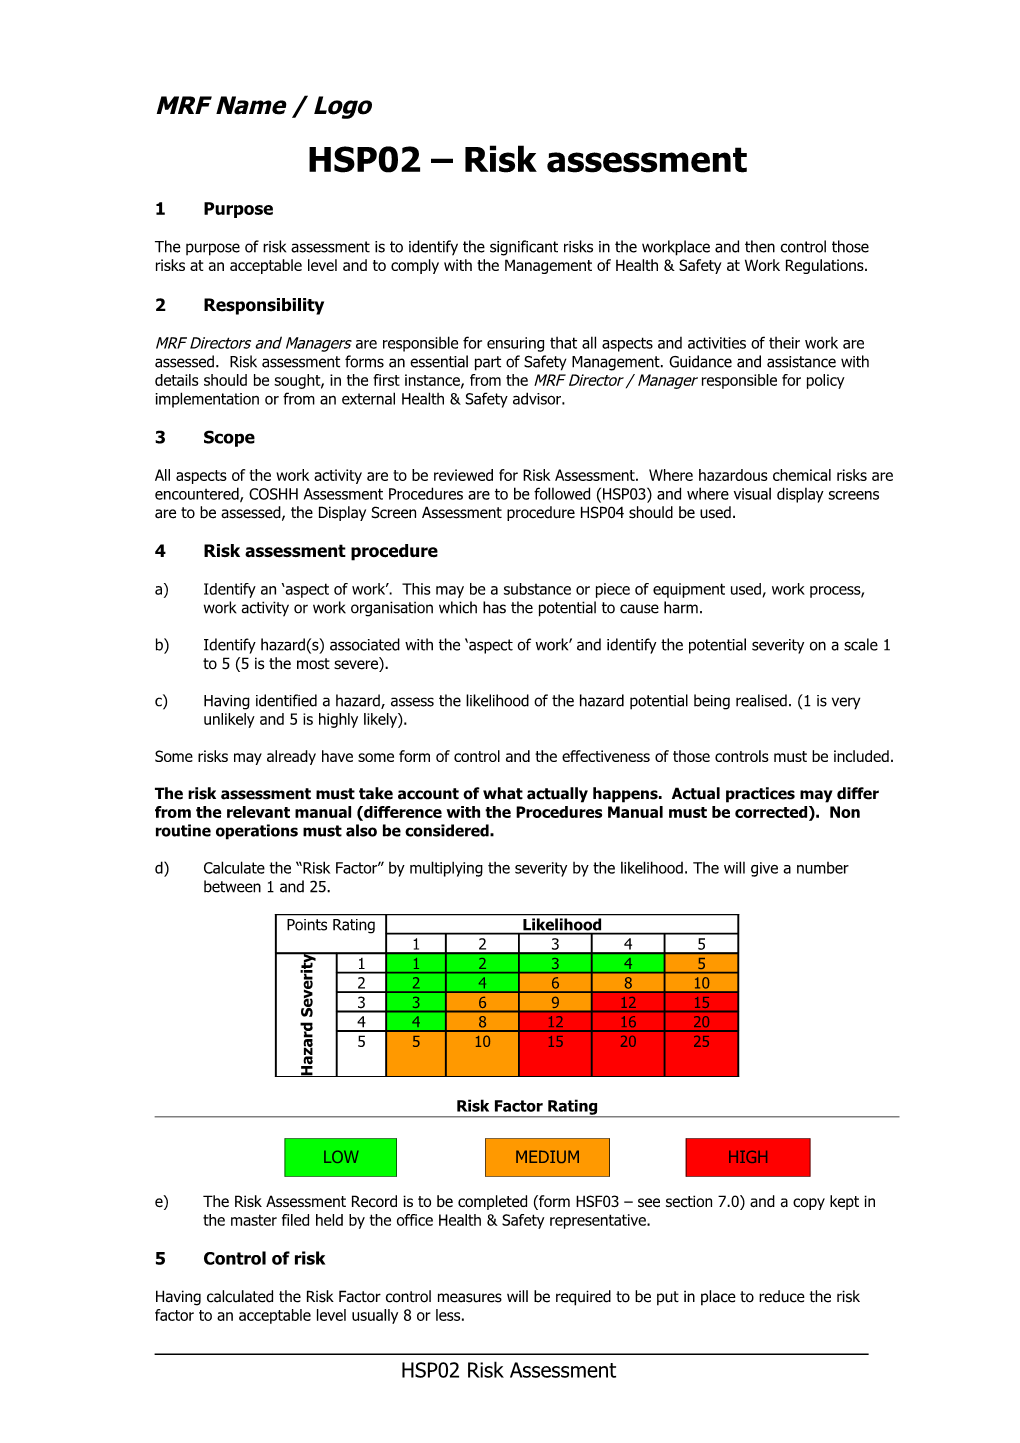 HSP02 Risk Assessment